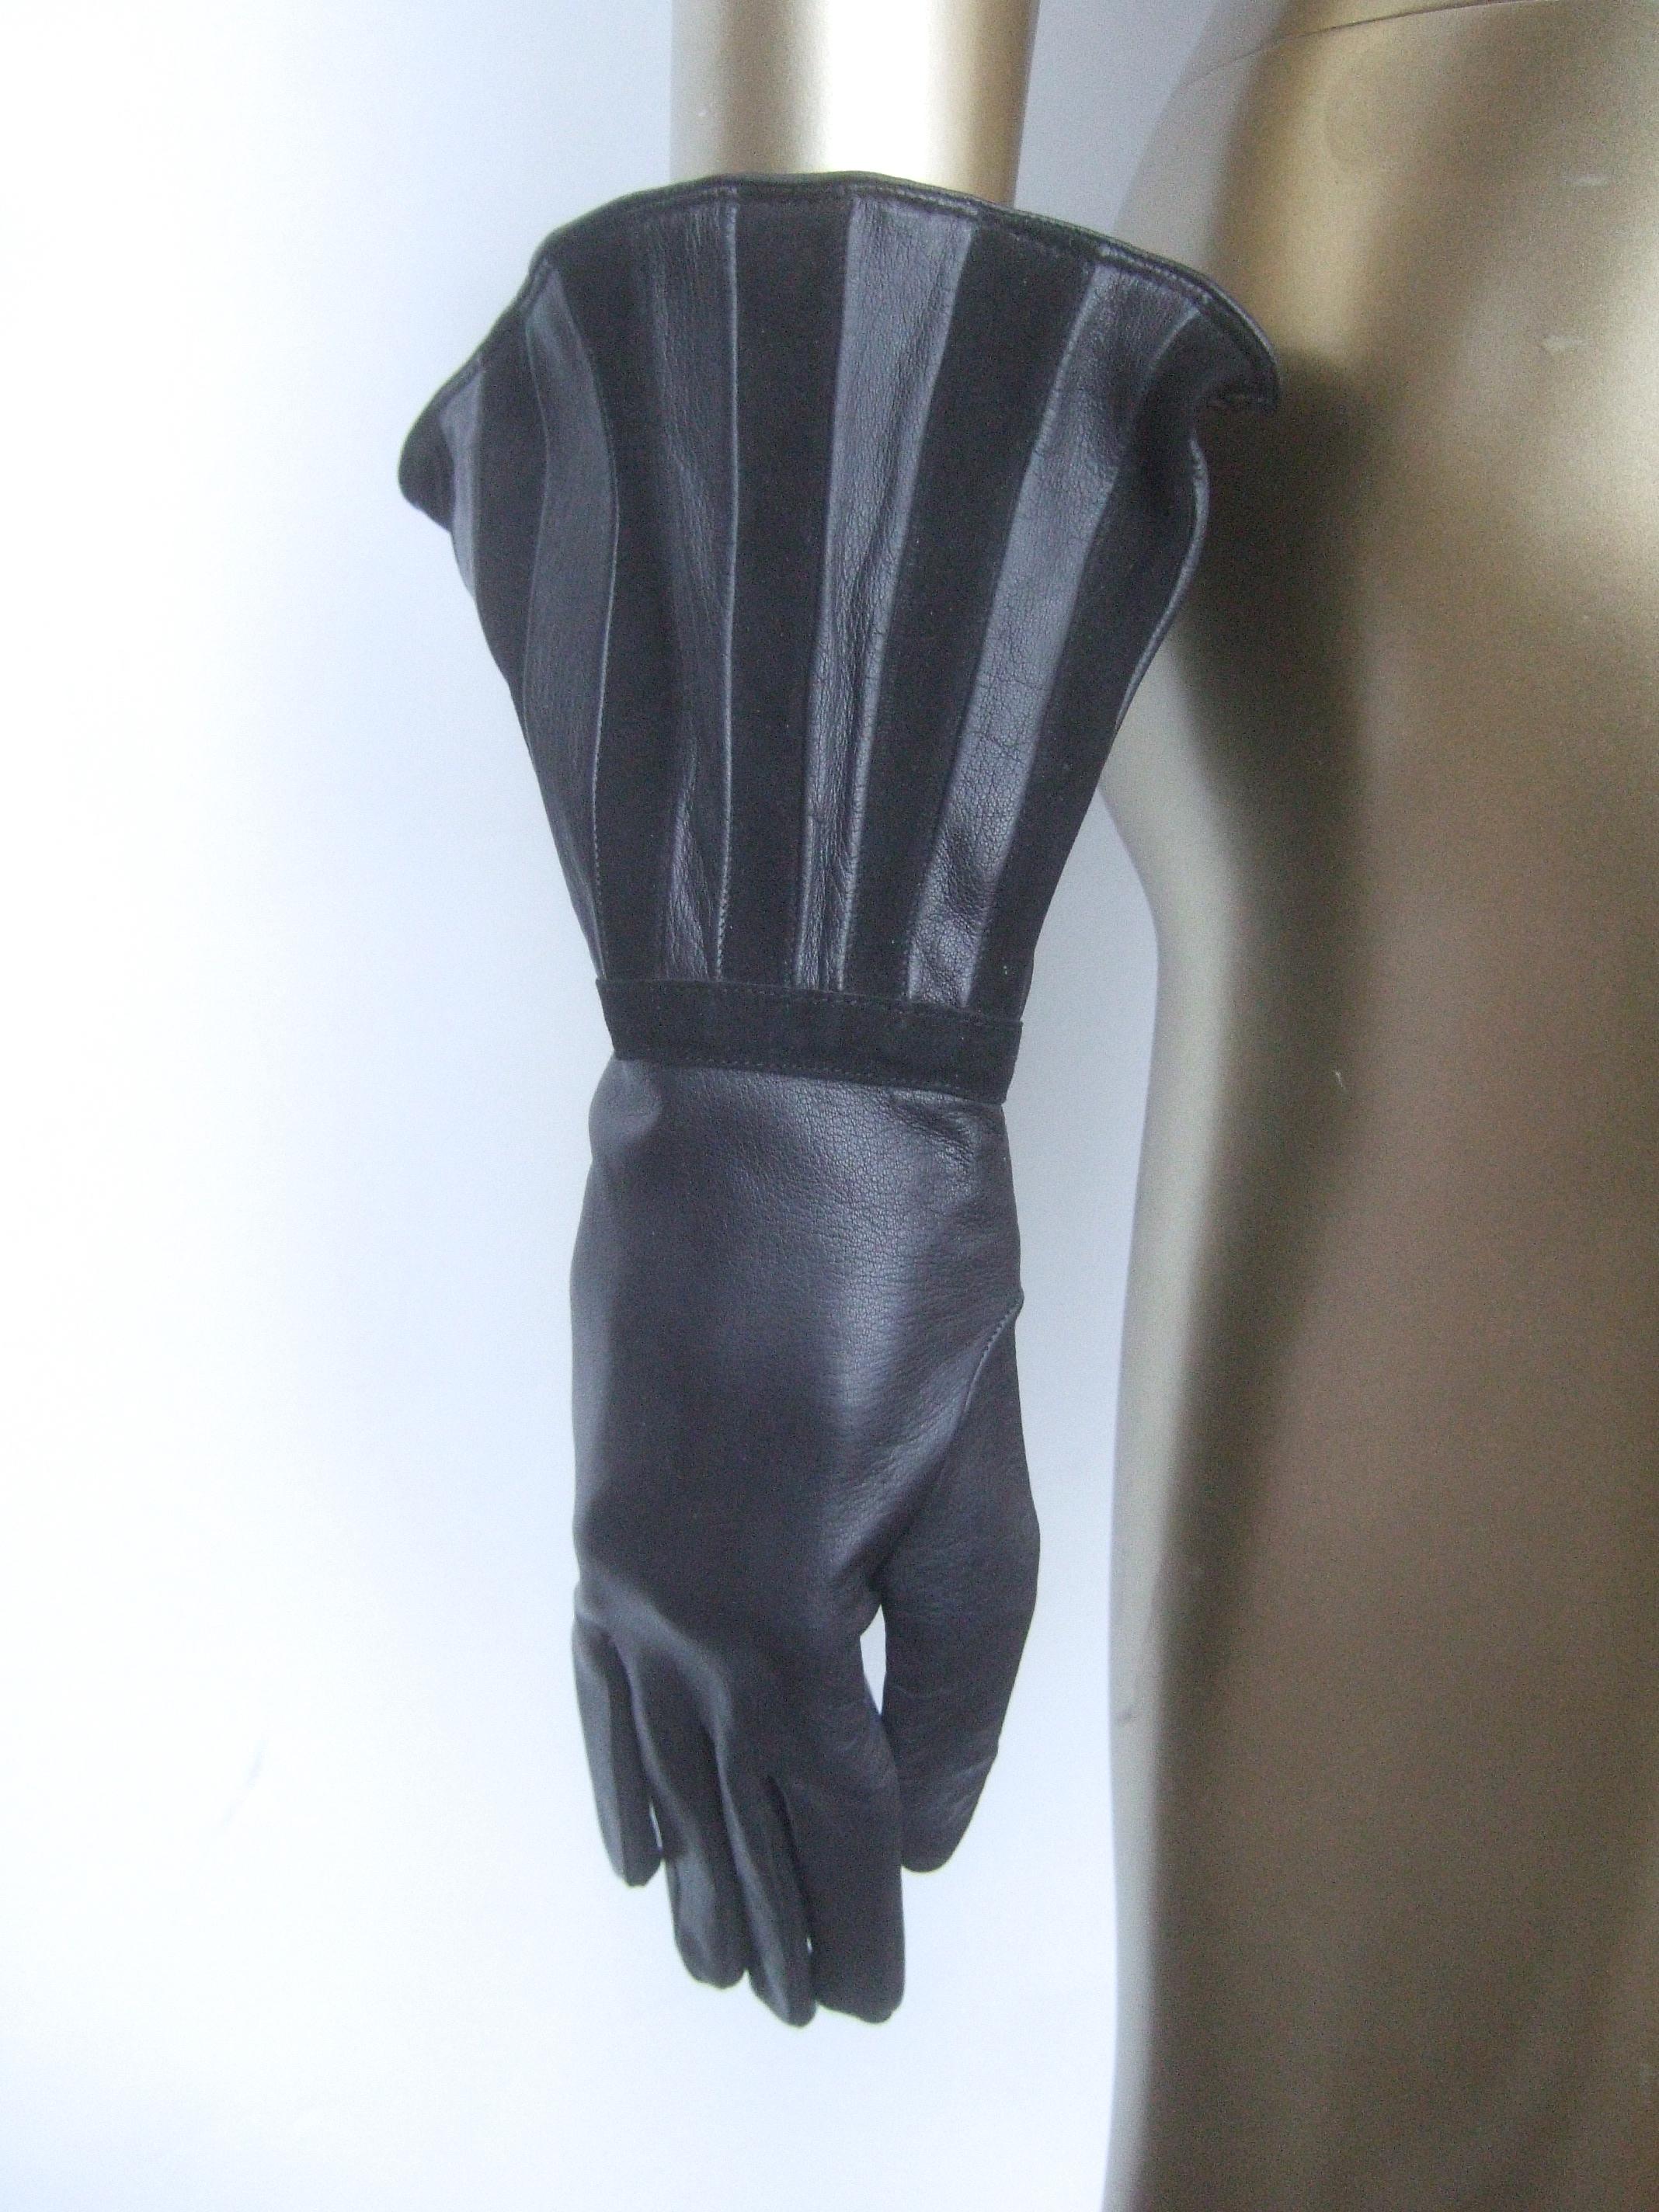 Saks Fifth Avenue Chic Avant-Garde Black Leather & Suede Trim Gloves c 1980s 5